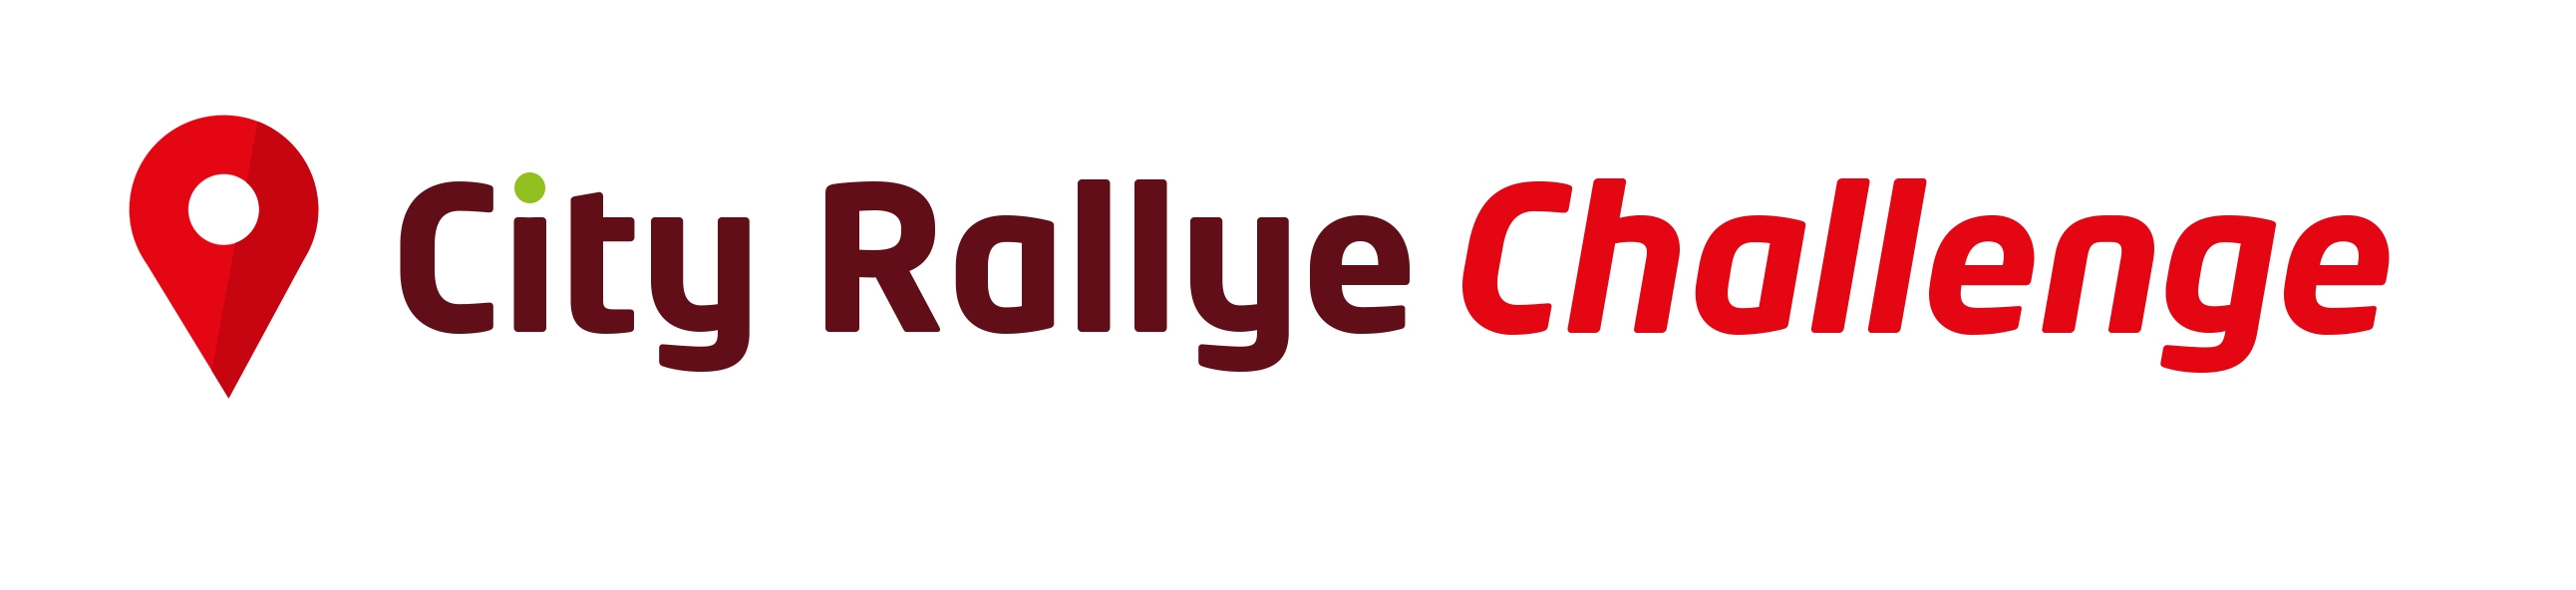 City Rallye Challenge